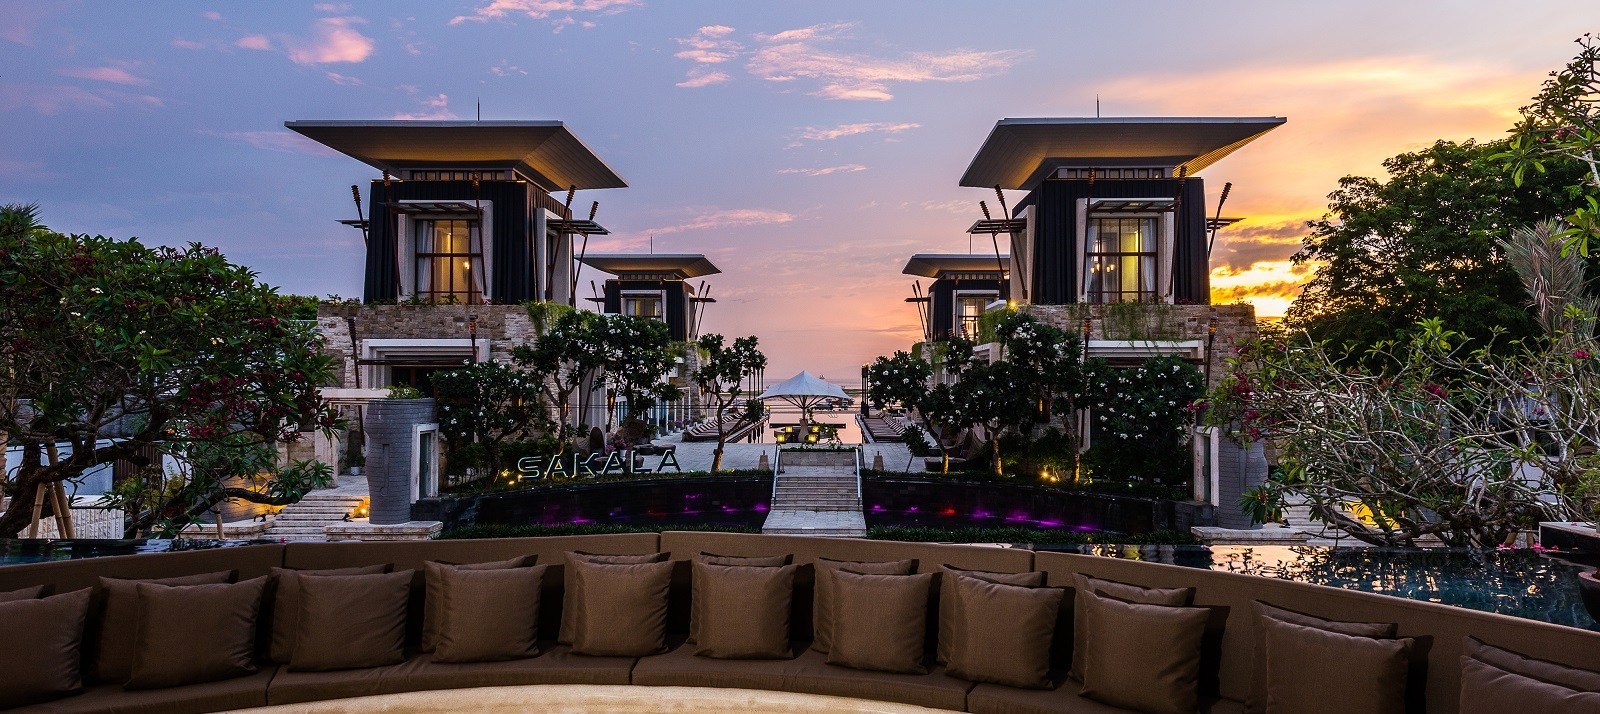 Bali, Indonesien, Mantra Sakala Resort & Beach Club